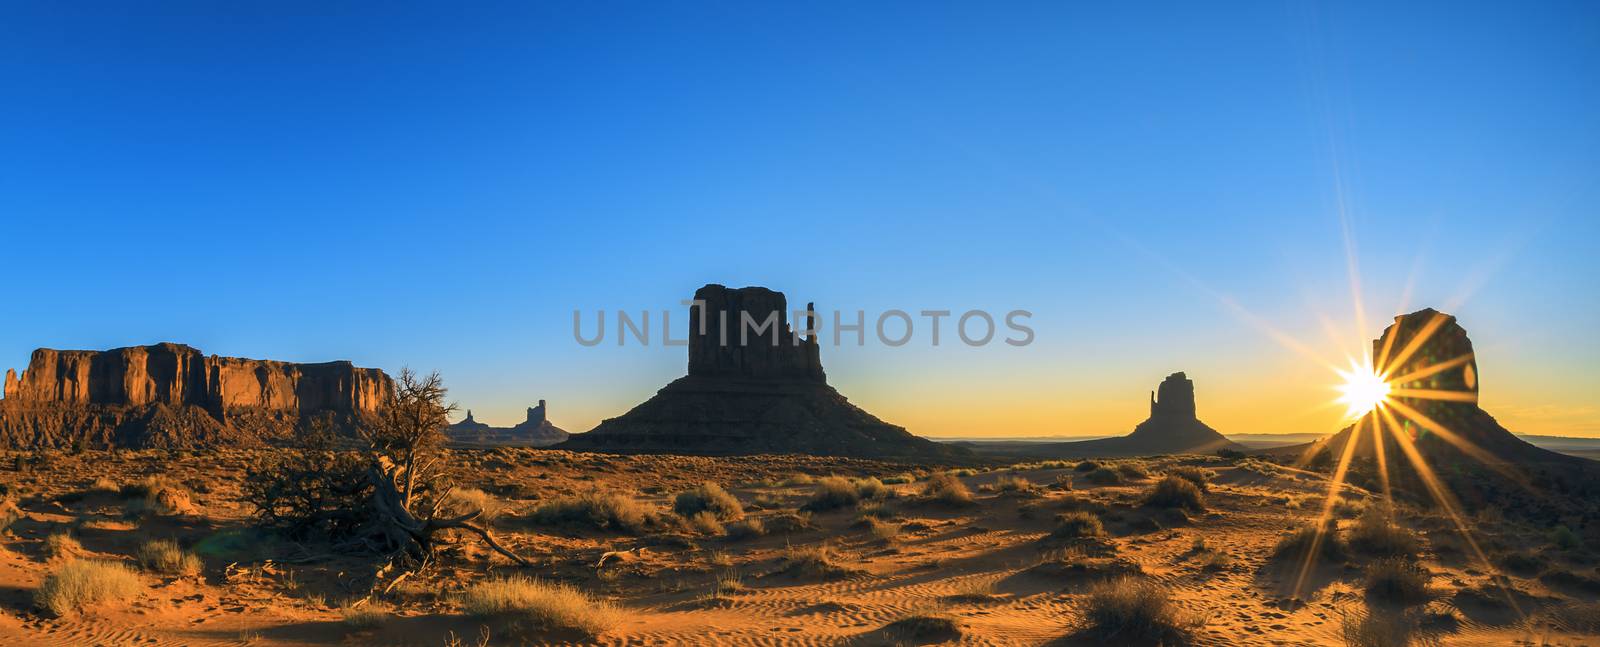 Panoramic view of Monument Valley Tribal Park At Sunrise, Arizona 